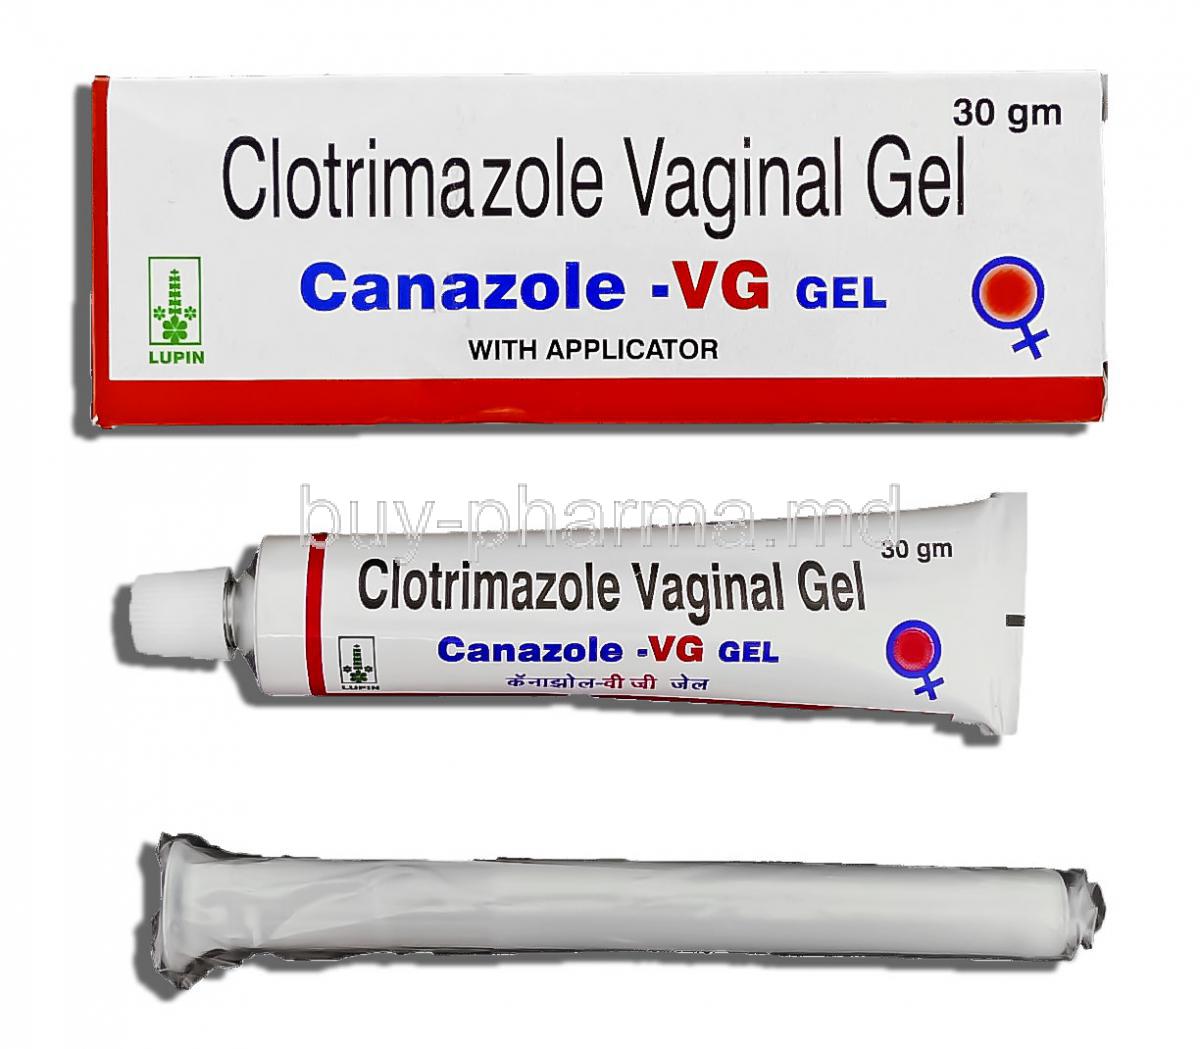 Candid-V, Clotrimazole 1% Vaginal Gel (Glenmark)